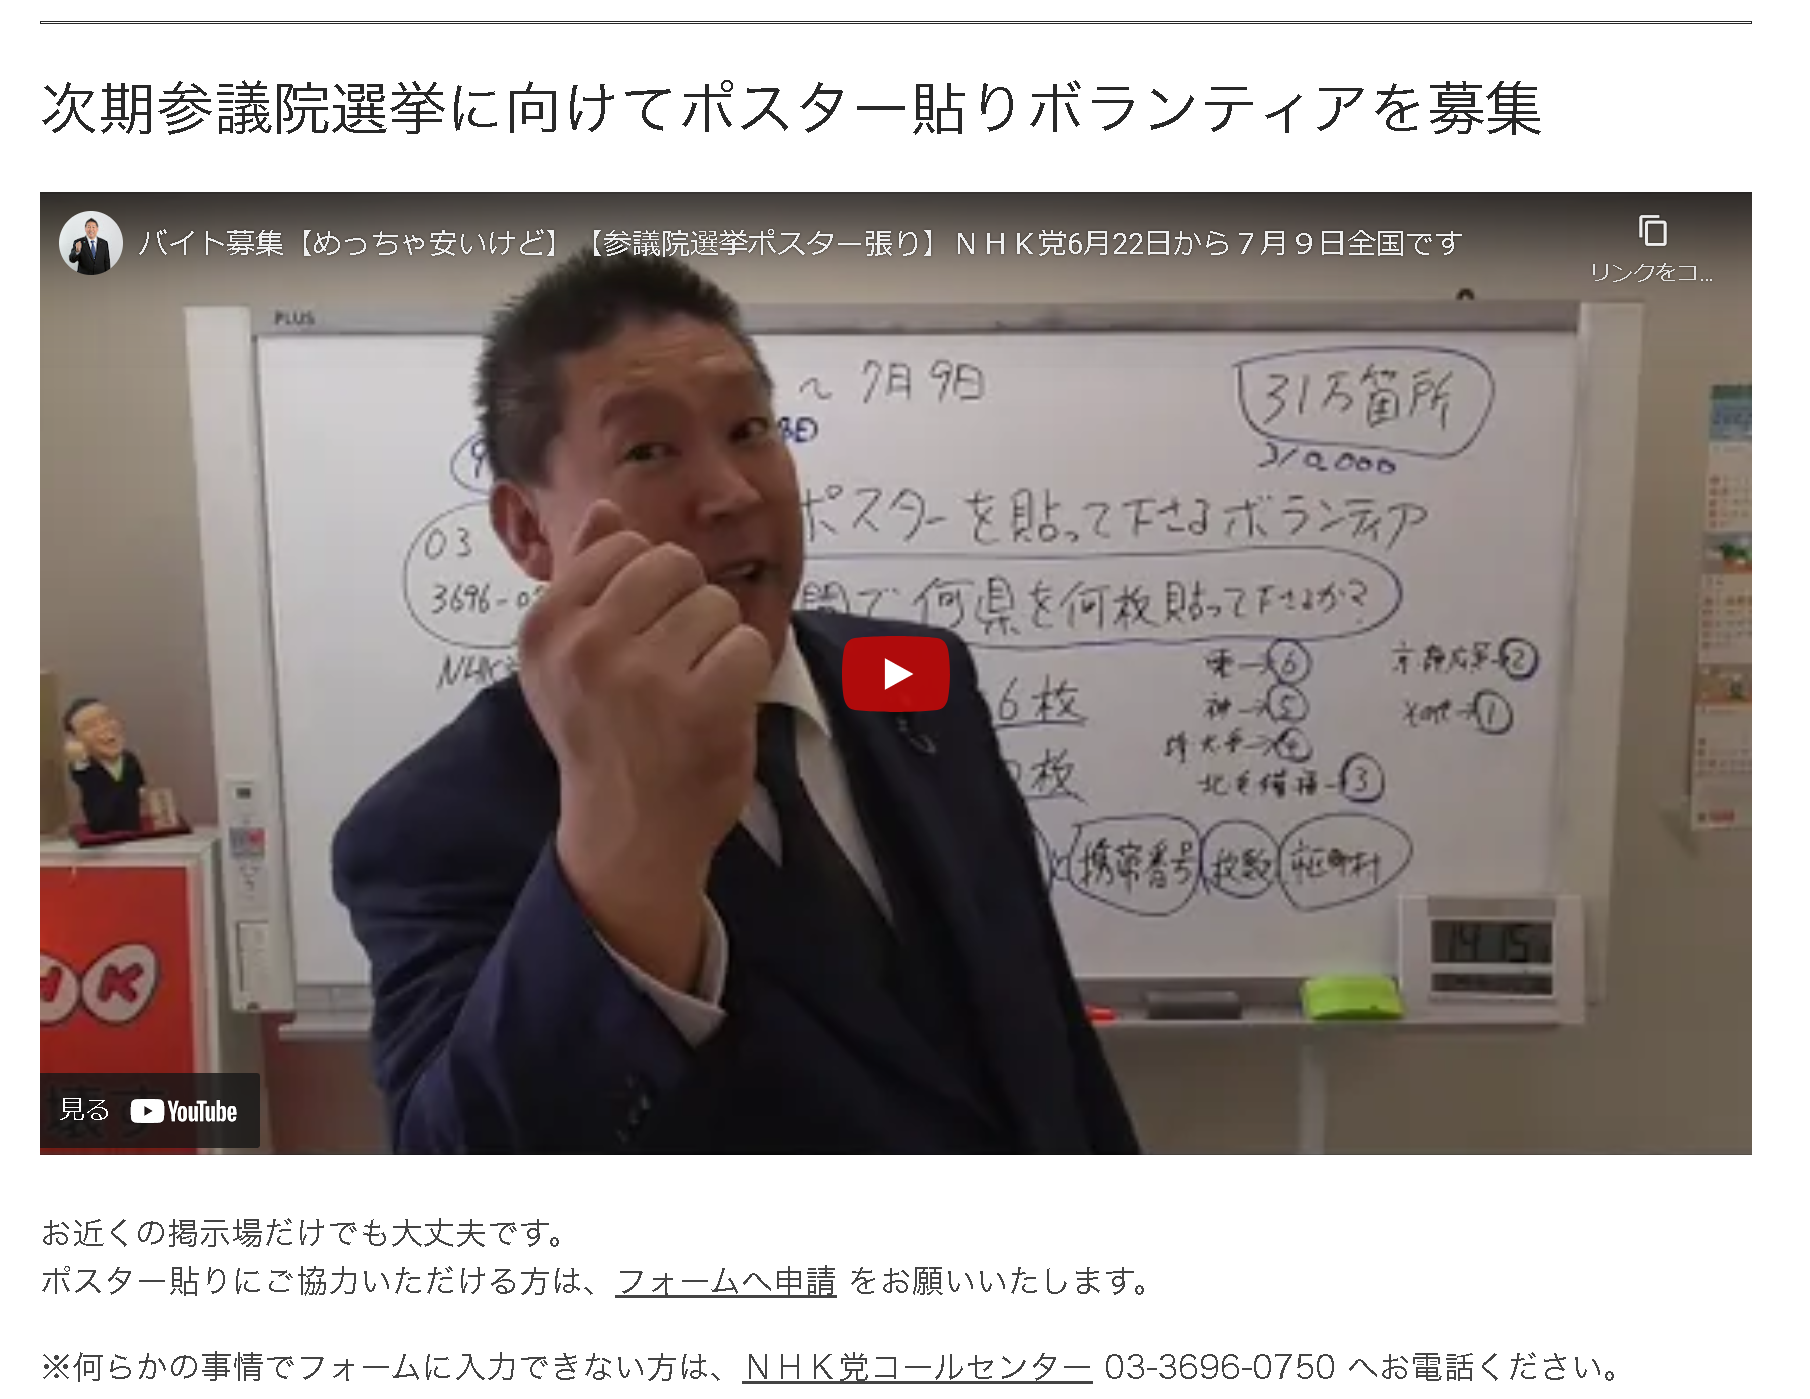 NHK党ポスター張りボランティア募集の画像